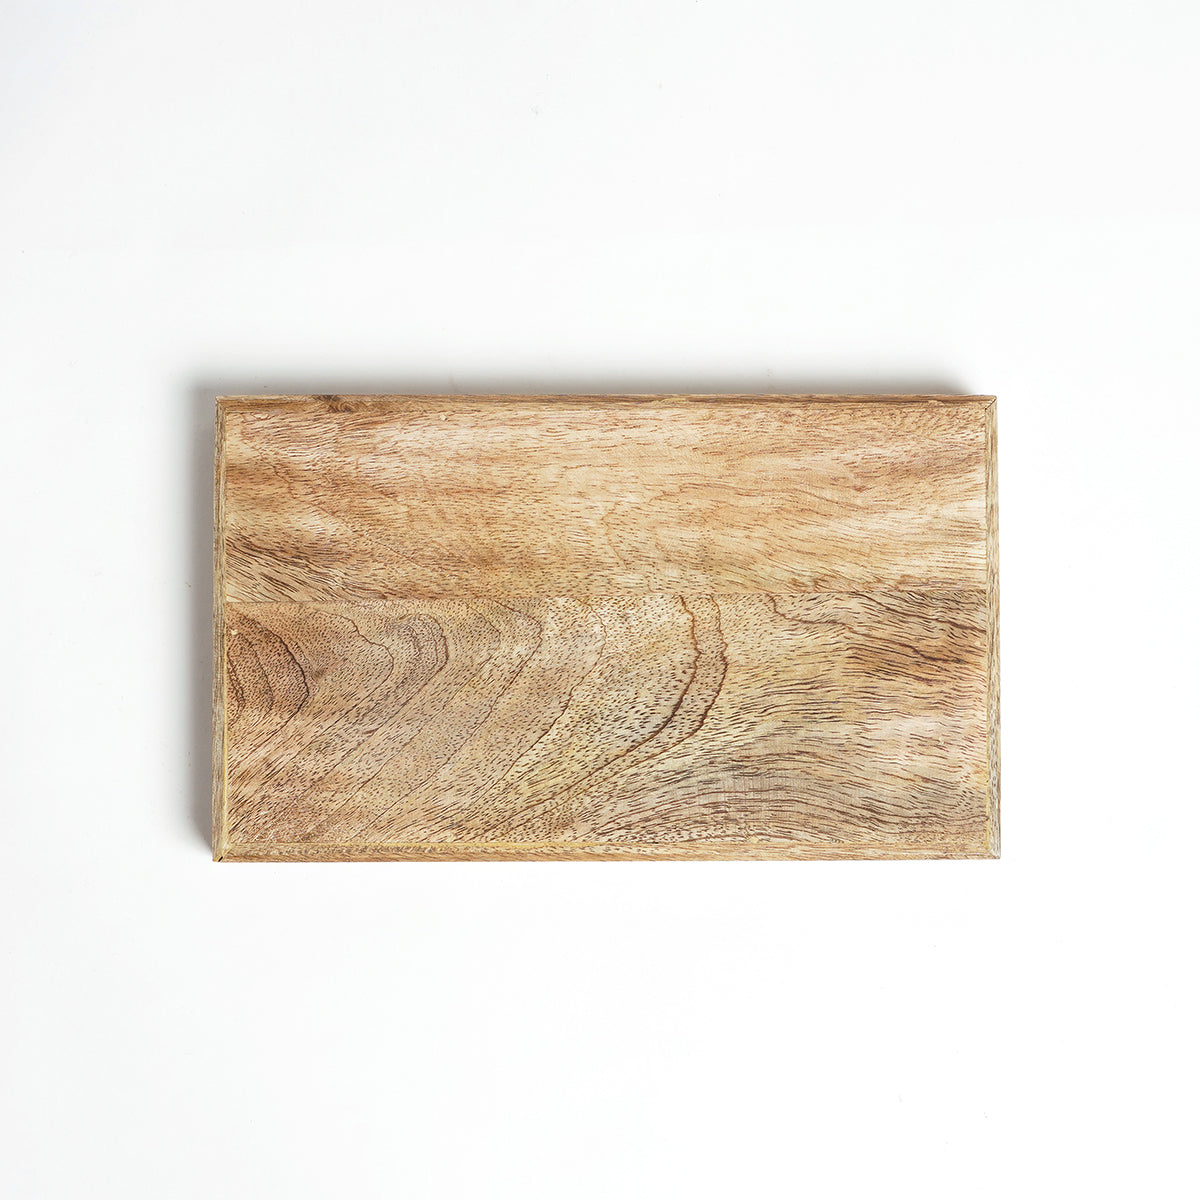 Medium rustic mango wood tray - size 6X10 inches